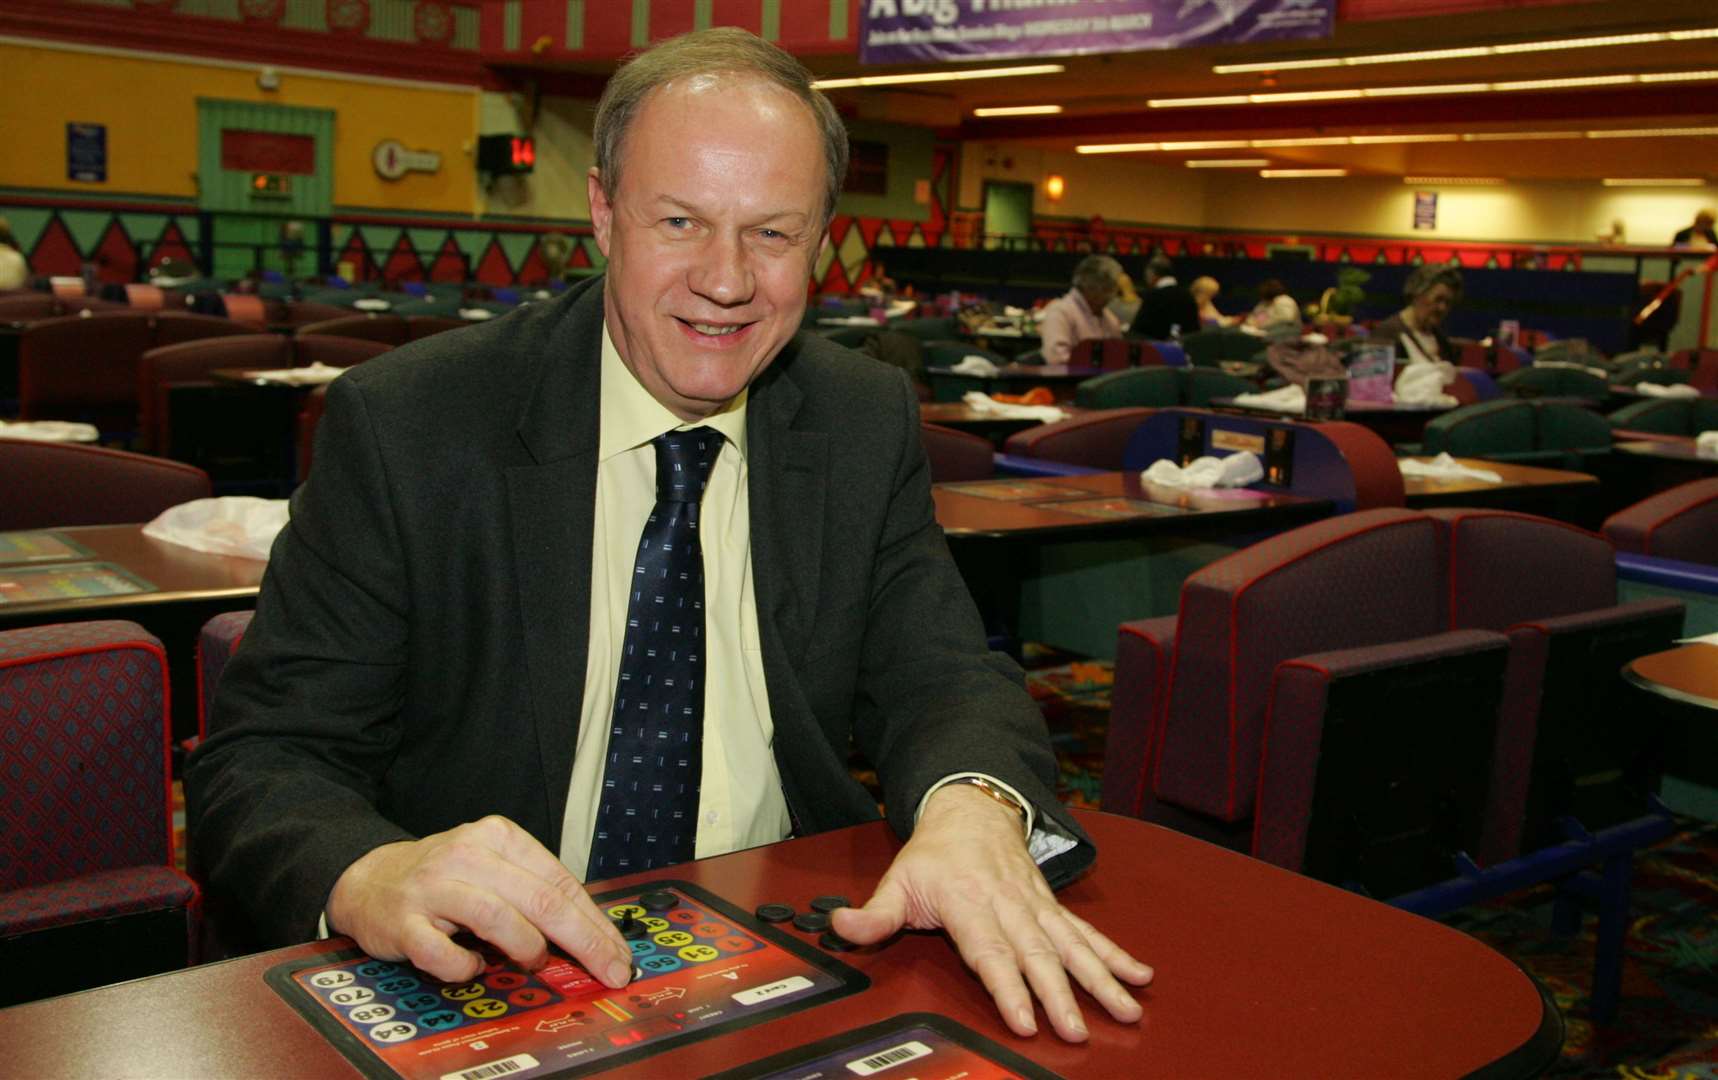 Ashford MP Damian Green inside Mecca Bingo in 2008